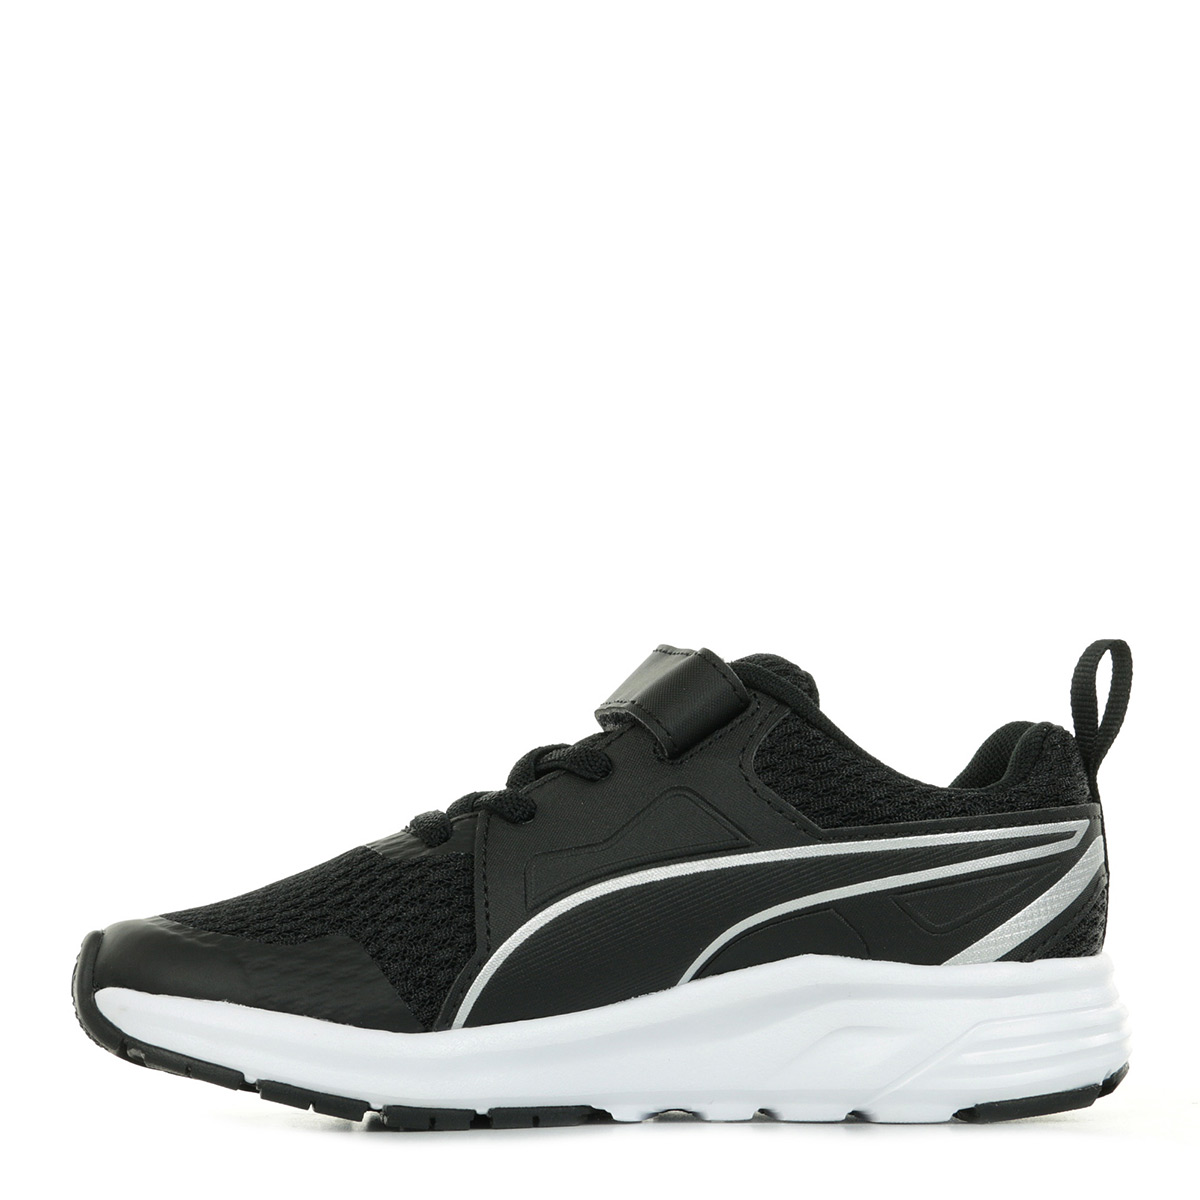 Puma shoes sneakers unisex pure jogger v ps size black black textile | eBay